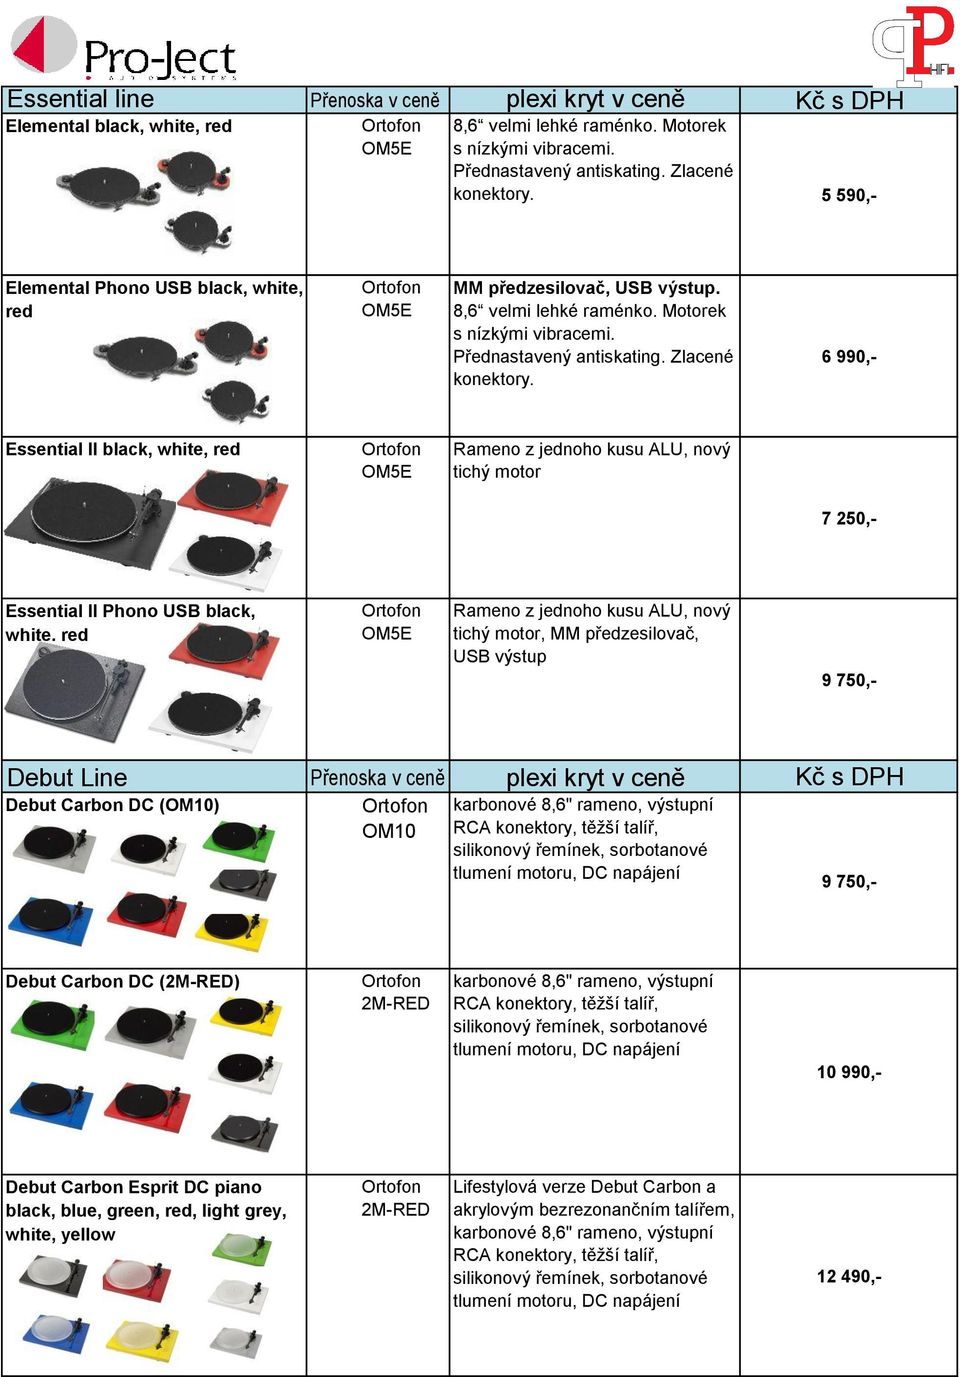 6 990,- Essential II black, white, red Rameno z jednoho kusu ALU, nový tichý motor 7 250,- Essential II Phono USB black, white, red Rameno z jednoho kusu ALU, nový tichý motor, MM předzesilovač, USB